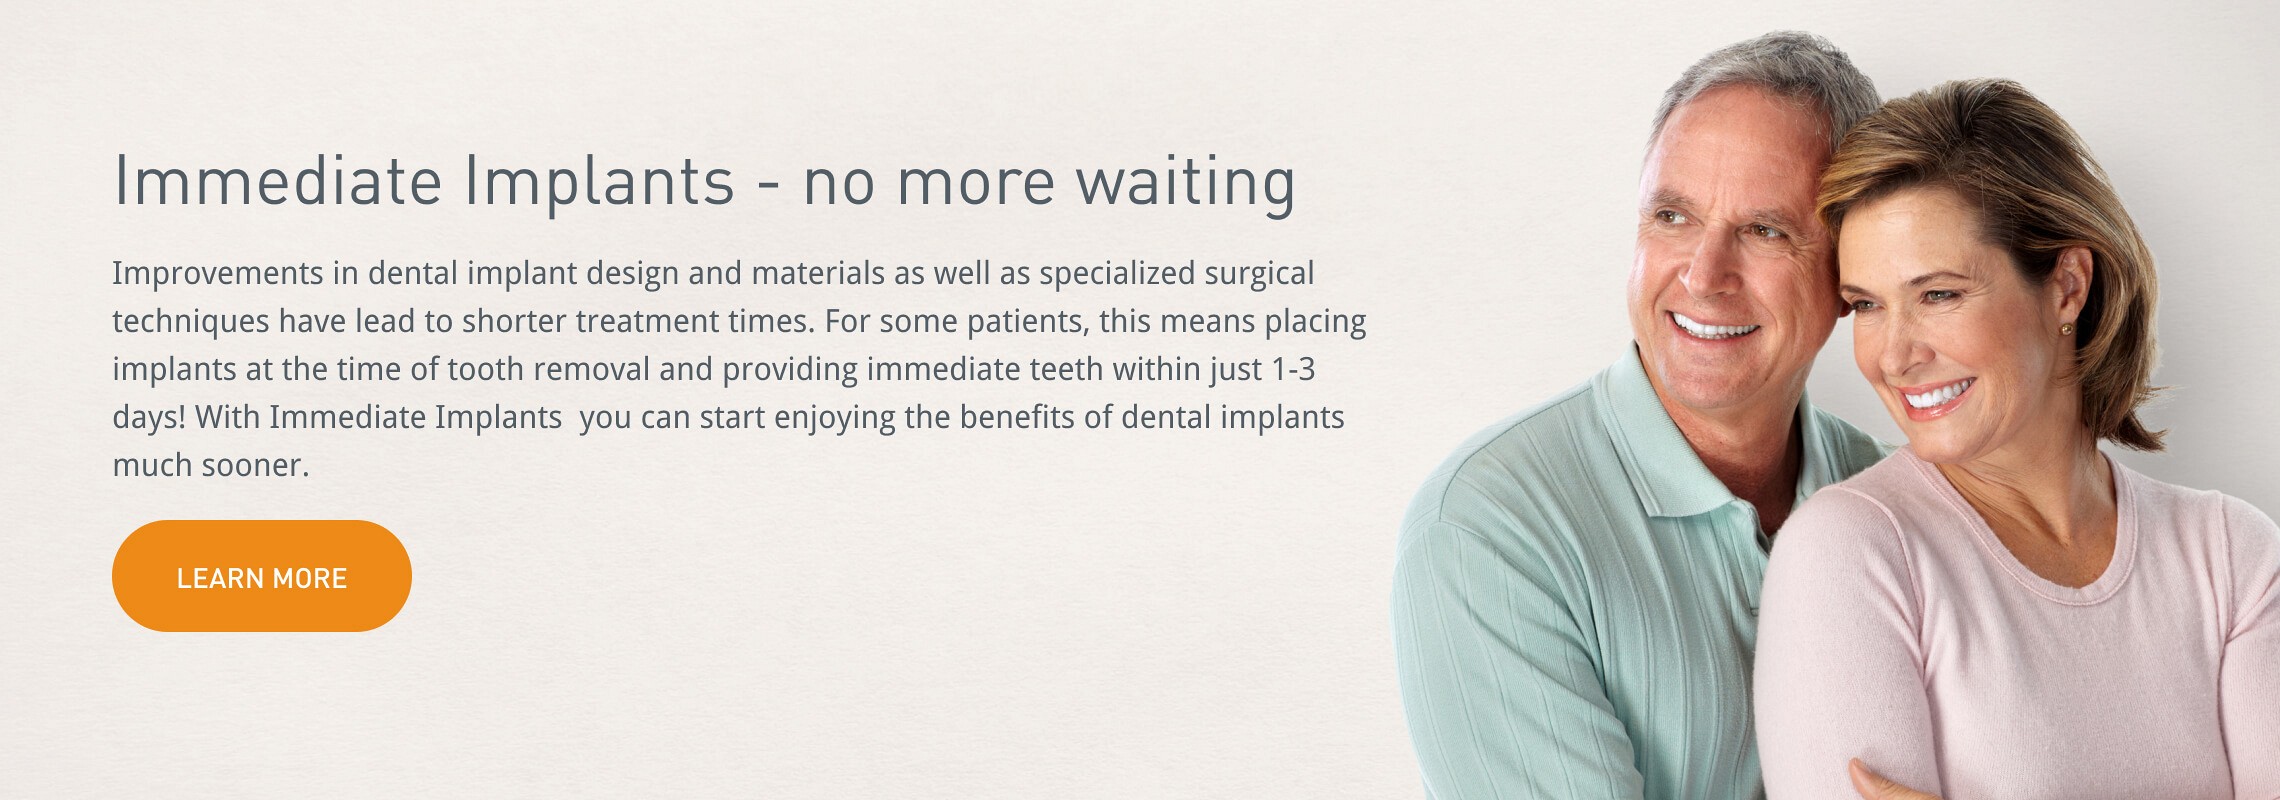 Immediate Implants - no more waiting